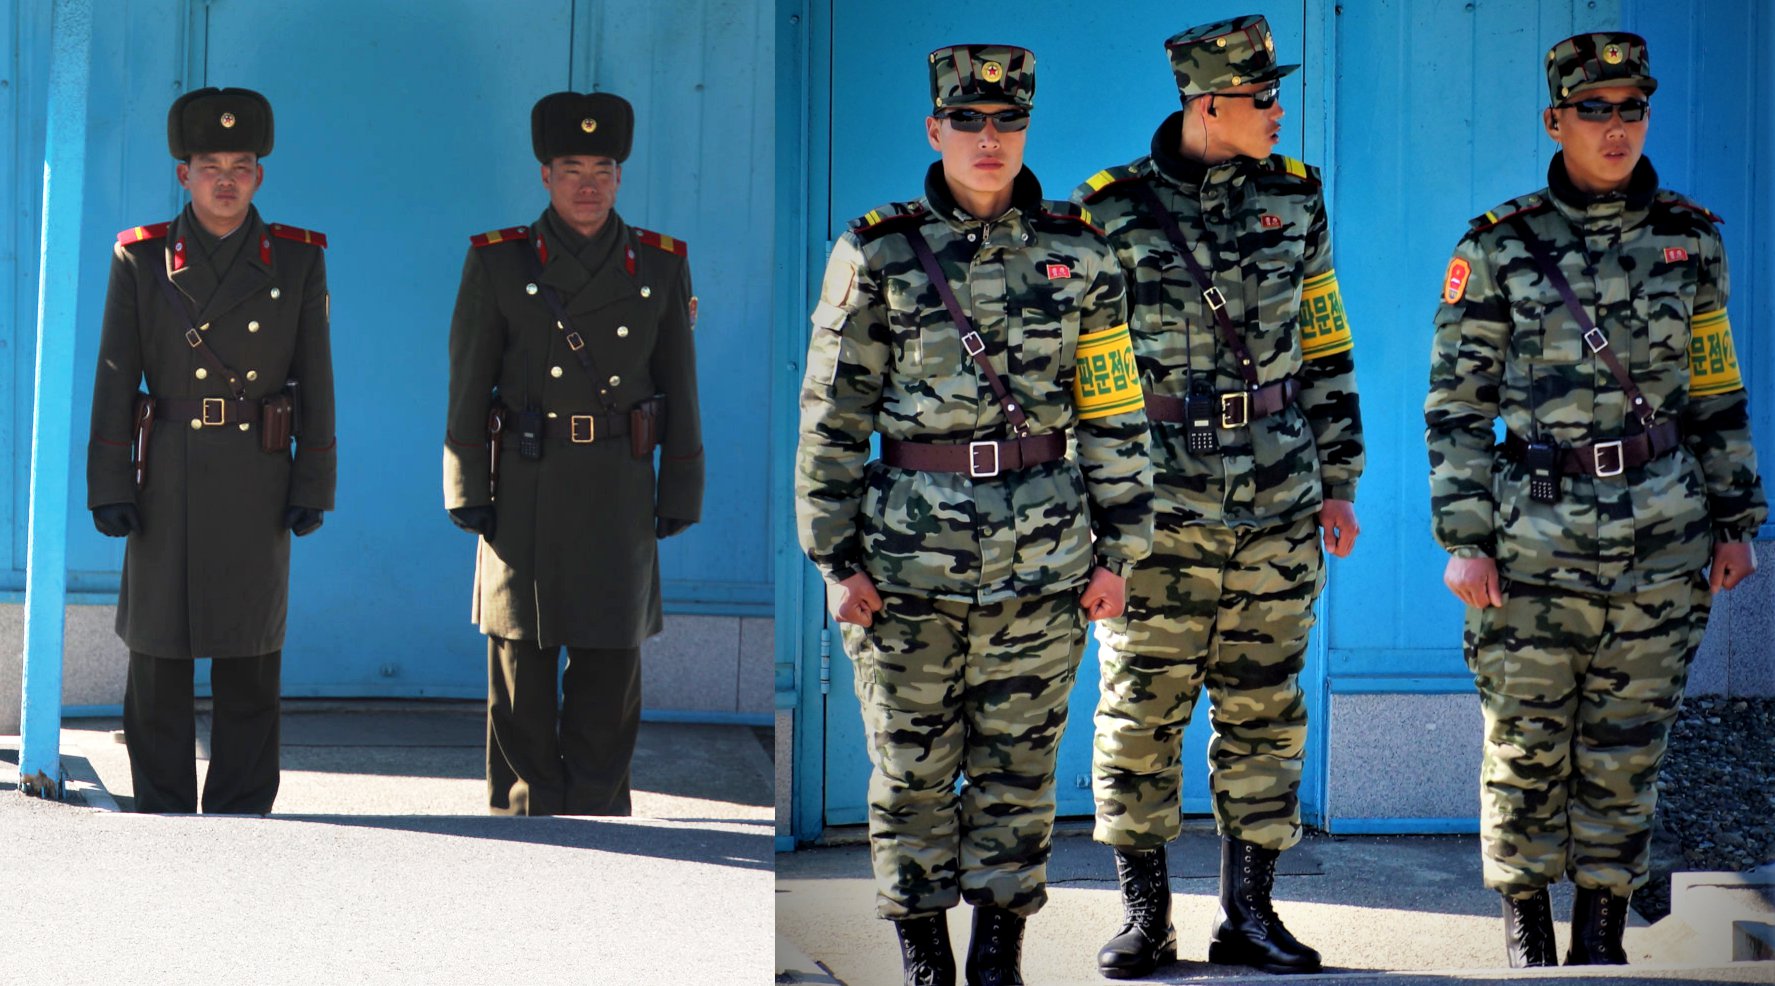 new-uniforms-north-korean-soldiers-dmz-jsa-panmunjom-comparison.jpg